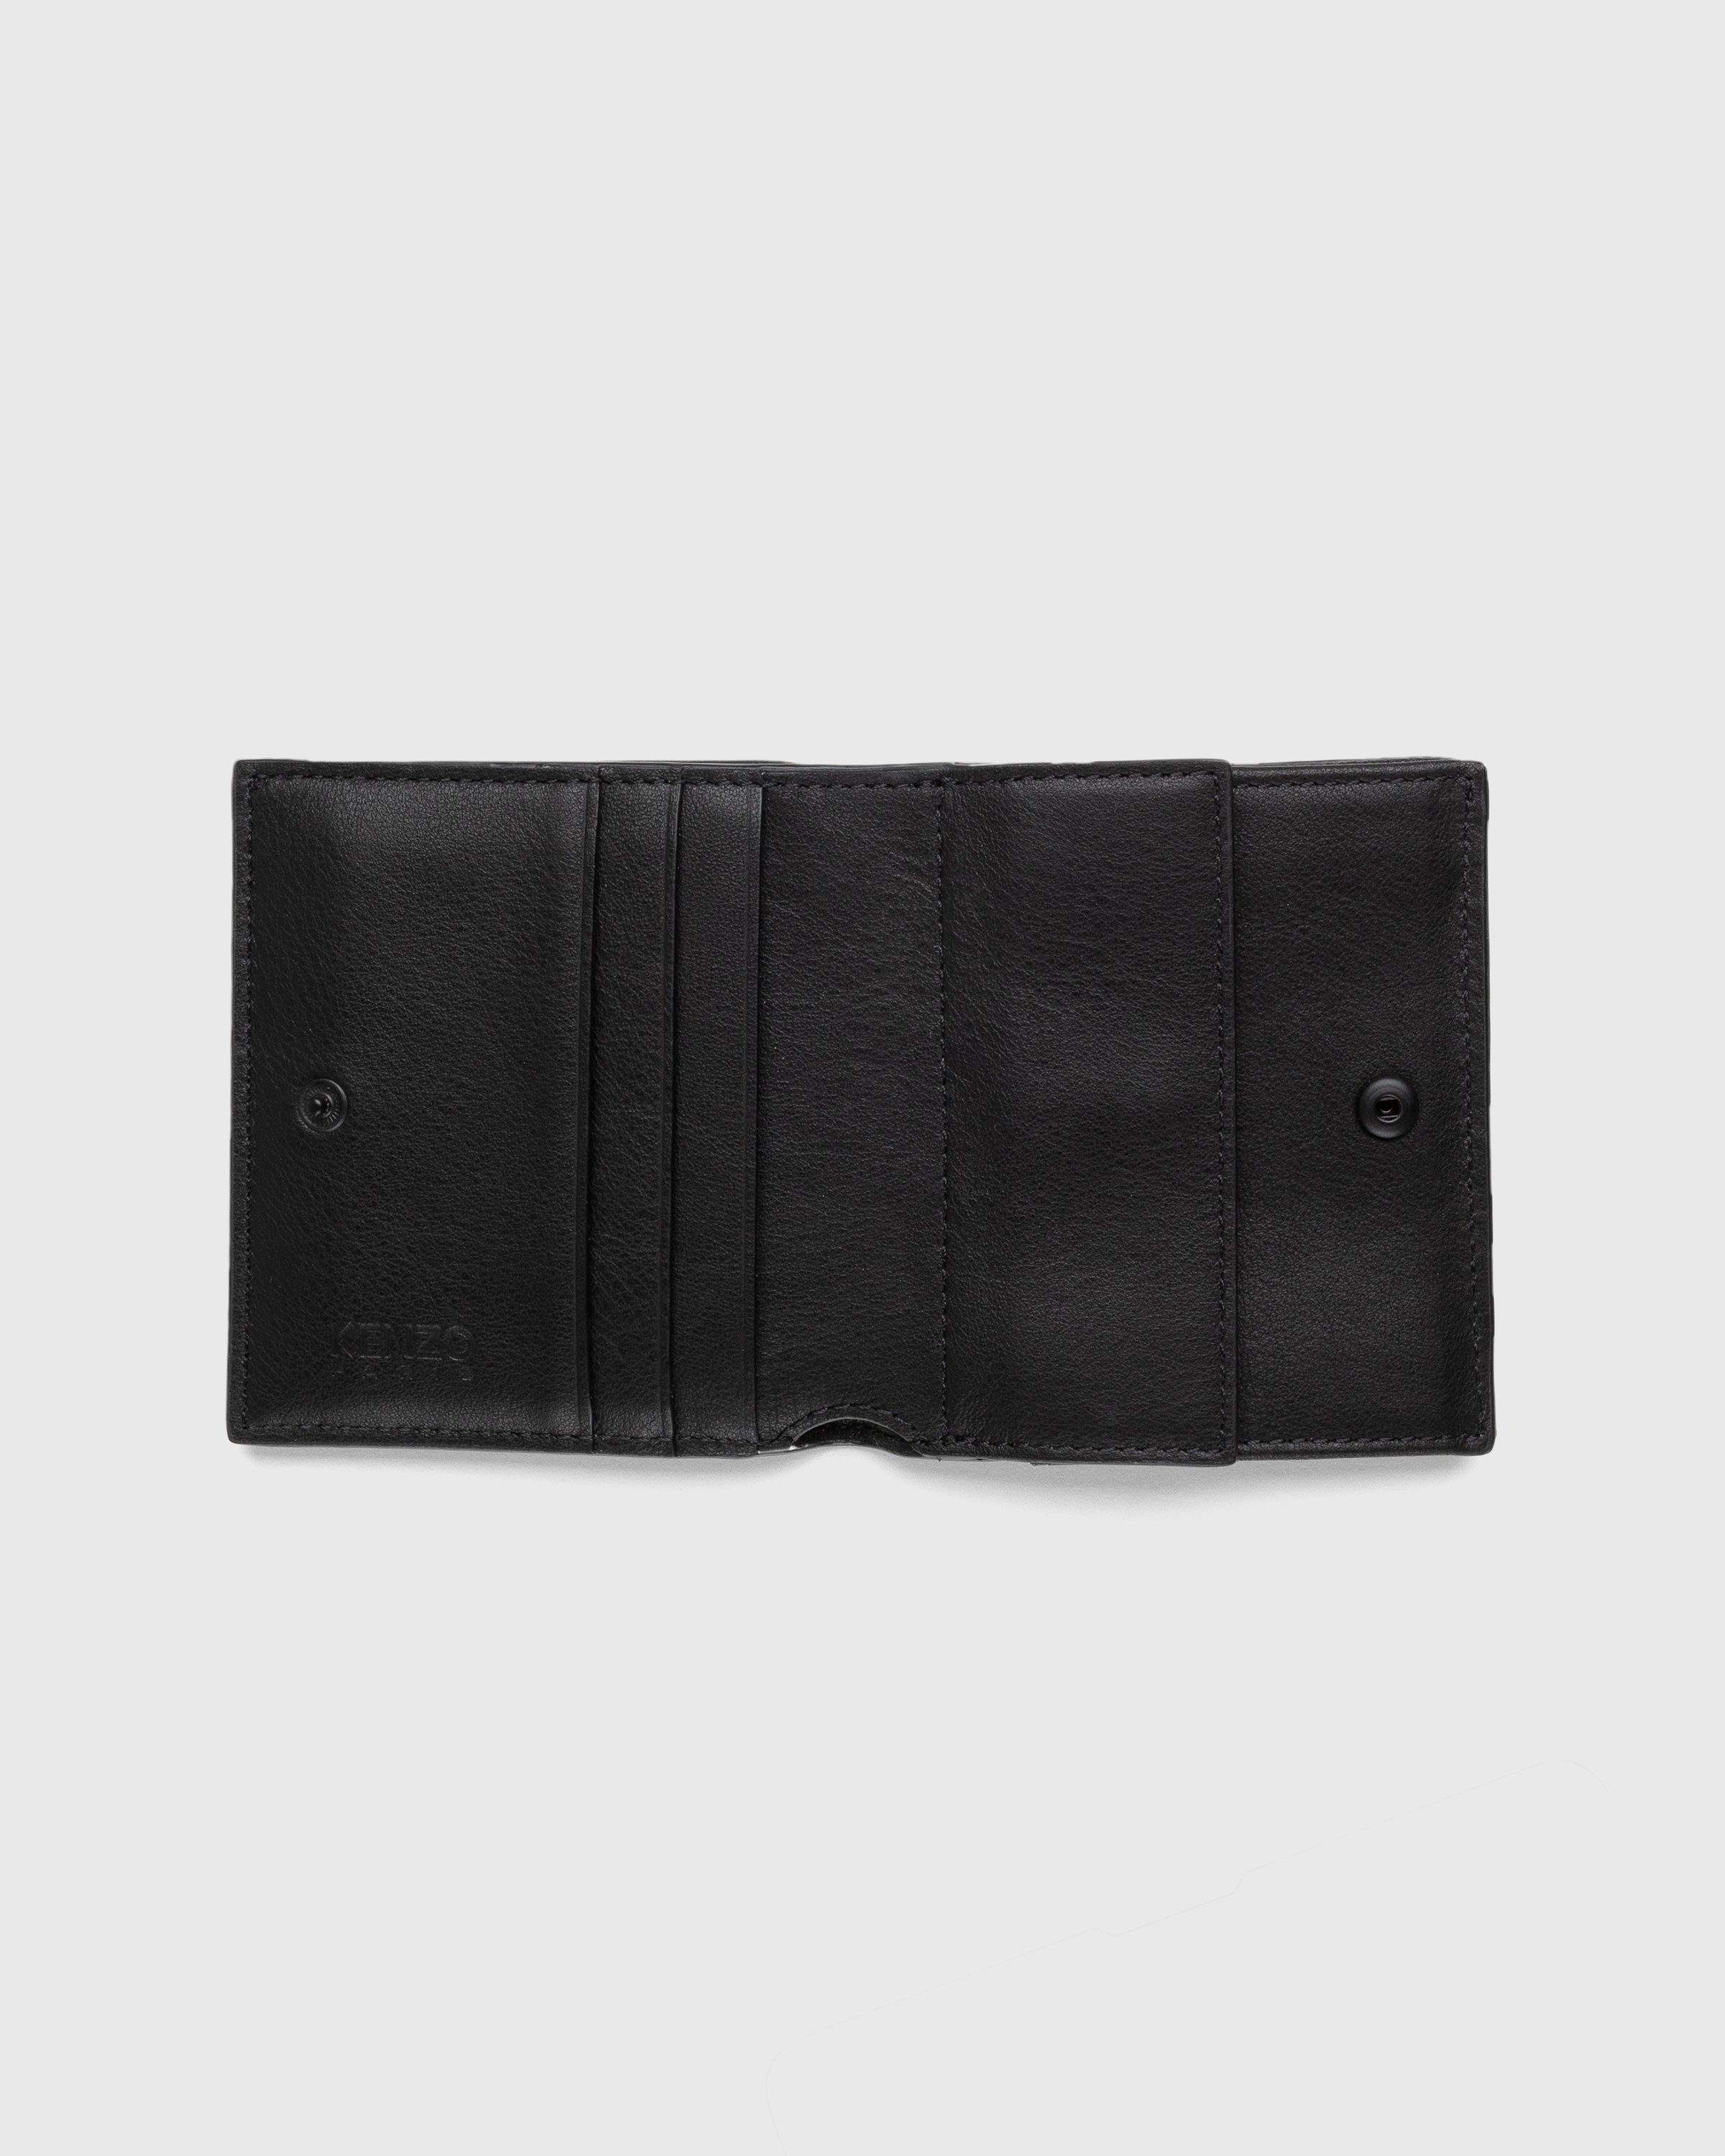 Kenzo - Crest Foldable Wallet Black - Accessories - Black - Image 2